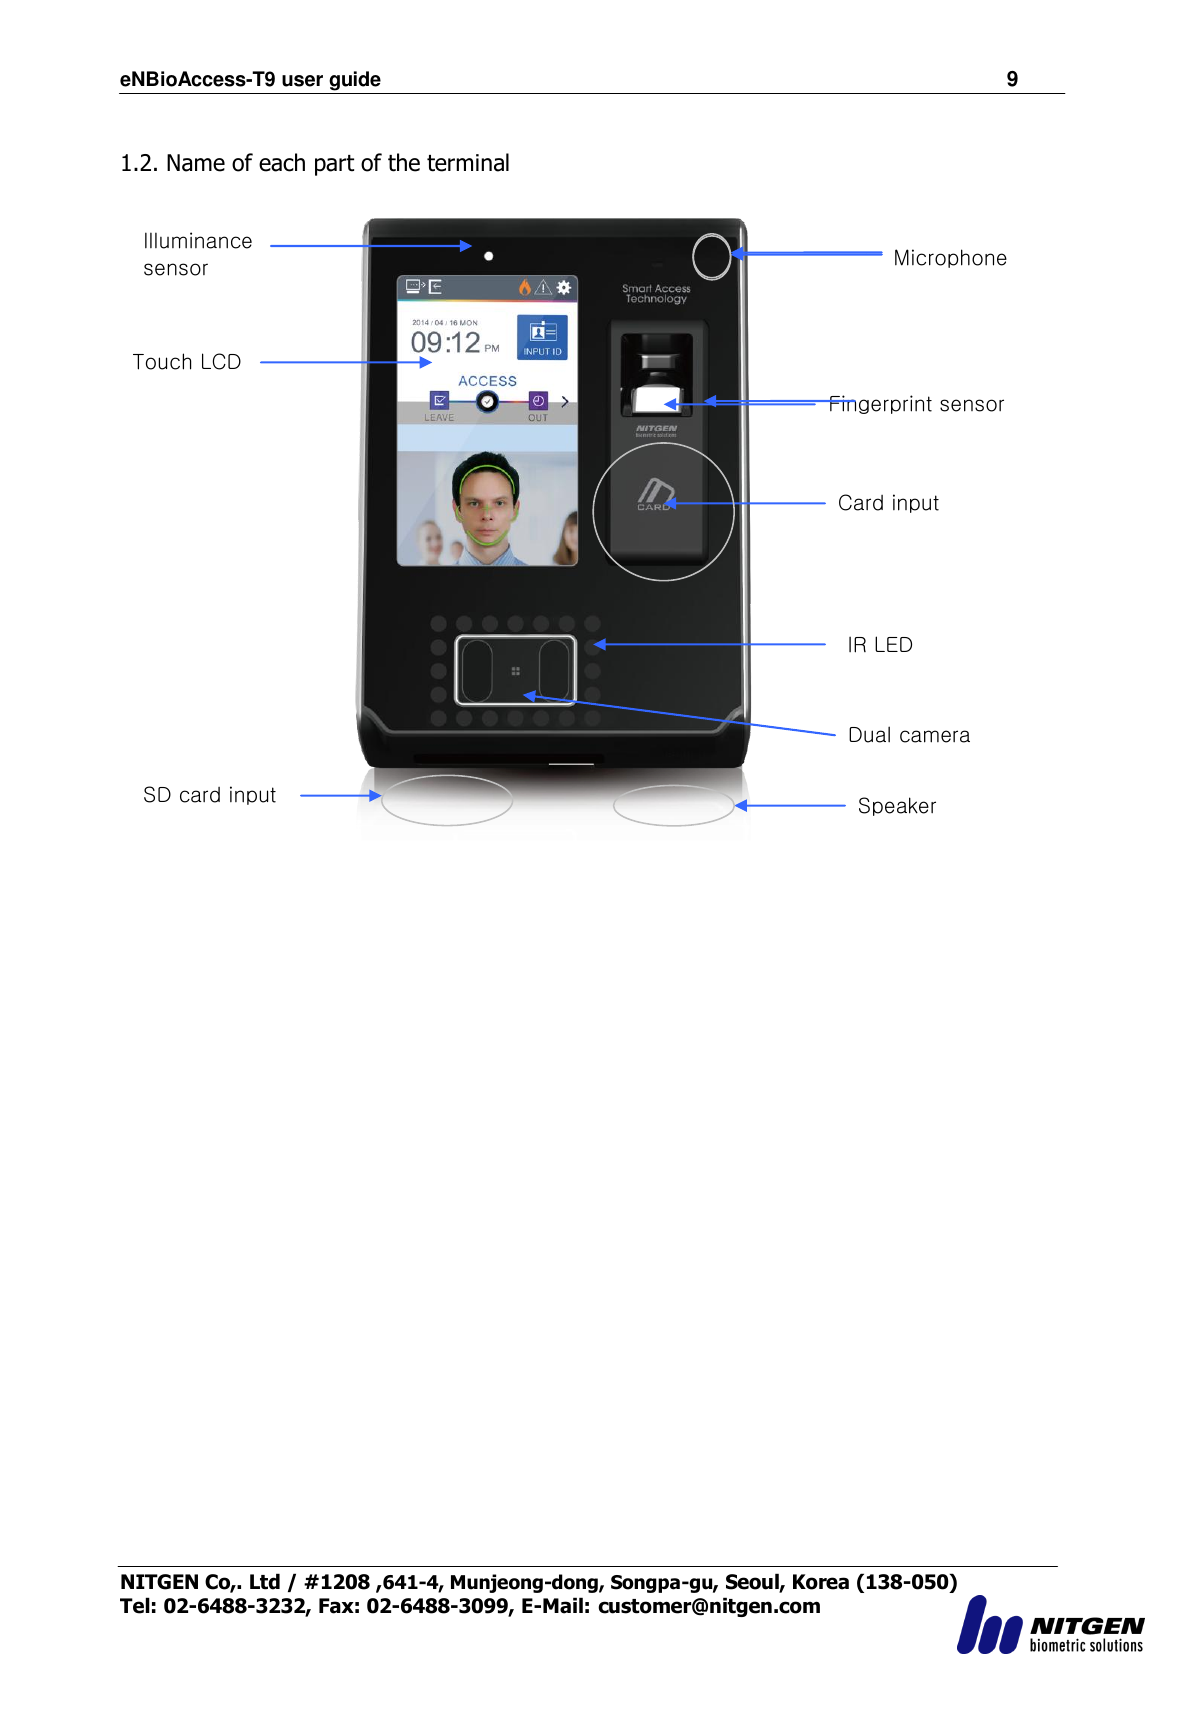 eNBioAccess-T9 user guide                                                               9 NITGEN Co,. Ltd / #1208 ,641-4, Munjeong-dong, Songpa-gu, Seoul, Korea (138-050) Tel: 02-6488-3232, Fax: 02-6488-3099, E-Mail: customer@nitgen.com   1.2. Name of each part of the terminal    Touch LCD   Fingerprint sensor Dual camera Card input IR LED   Illuminance sensor   SD card input Speaker   Microphone 